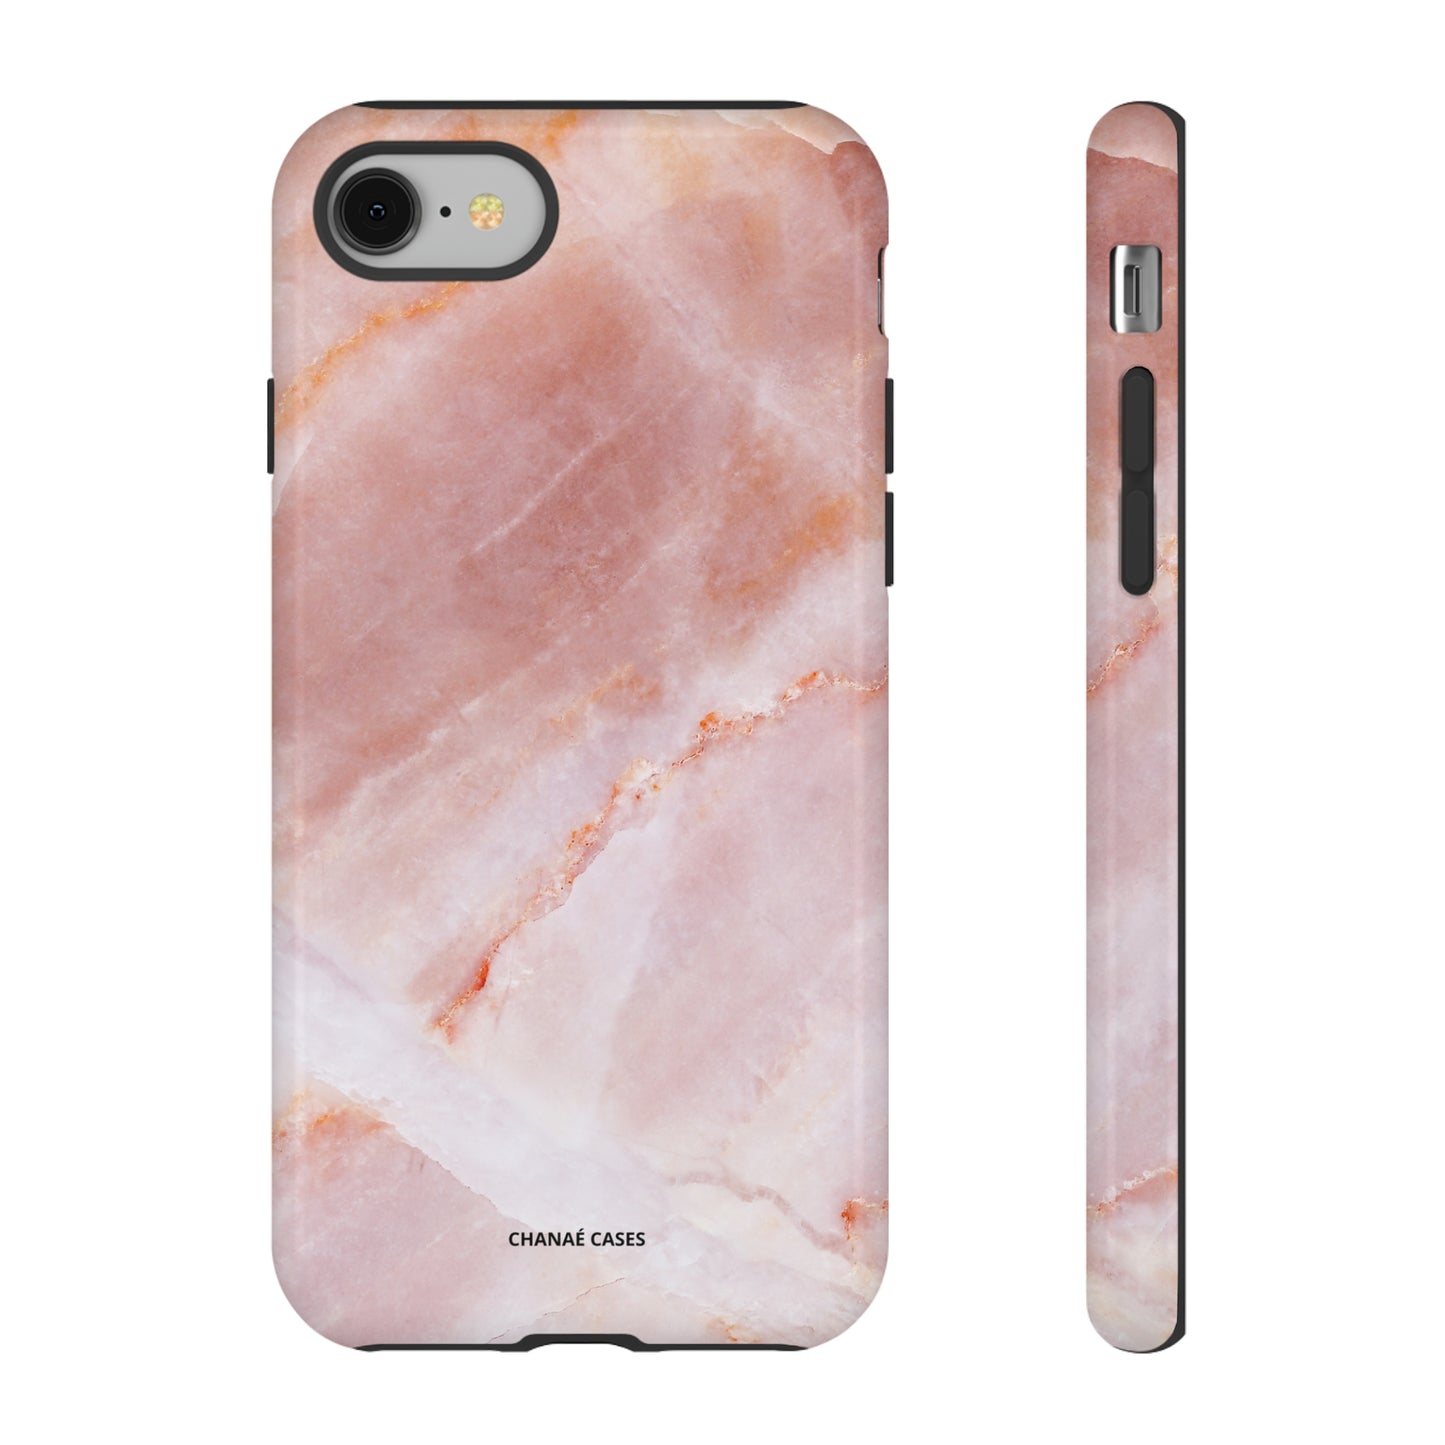 Bri Marble iPhone "Tough" Case (Pink)